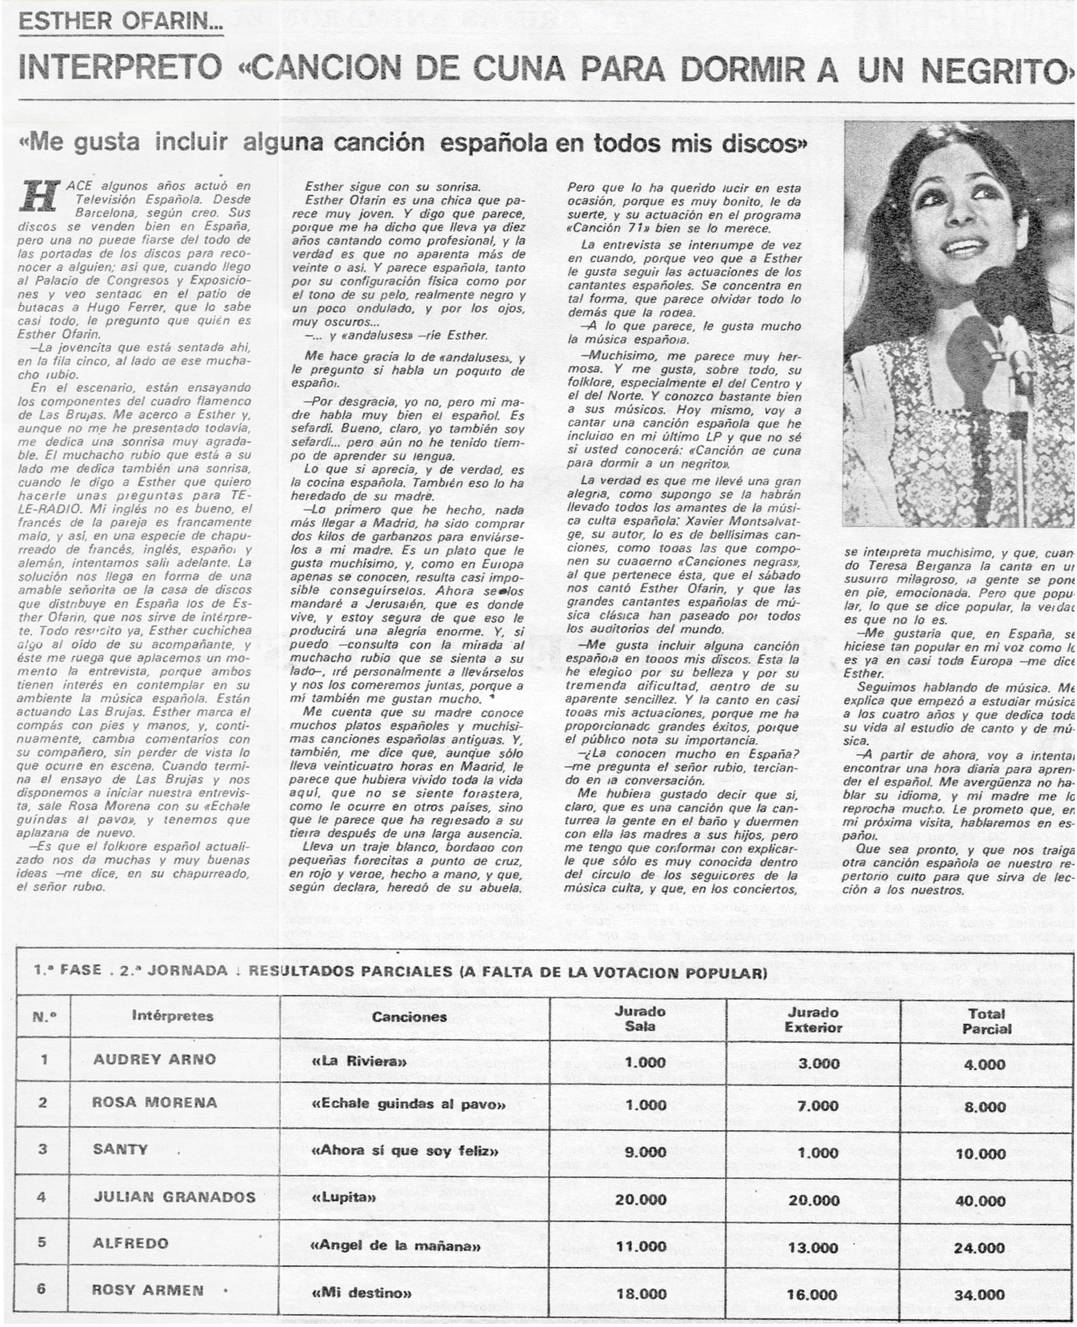 Spanish article from TELE RADIO - 1971